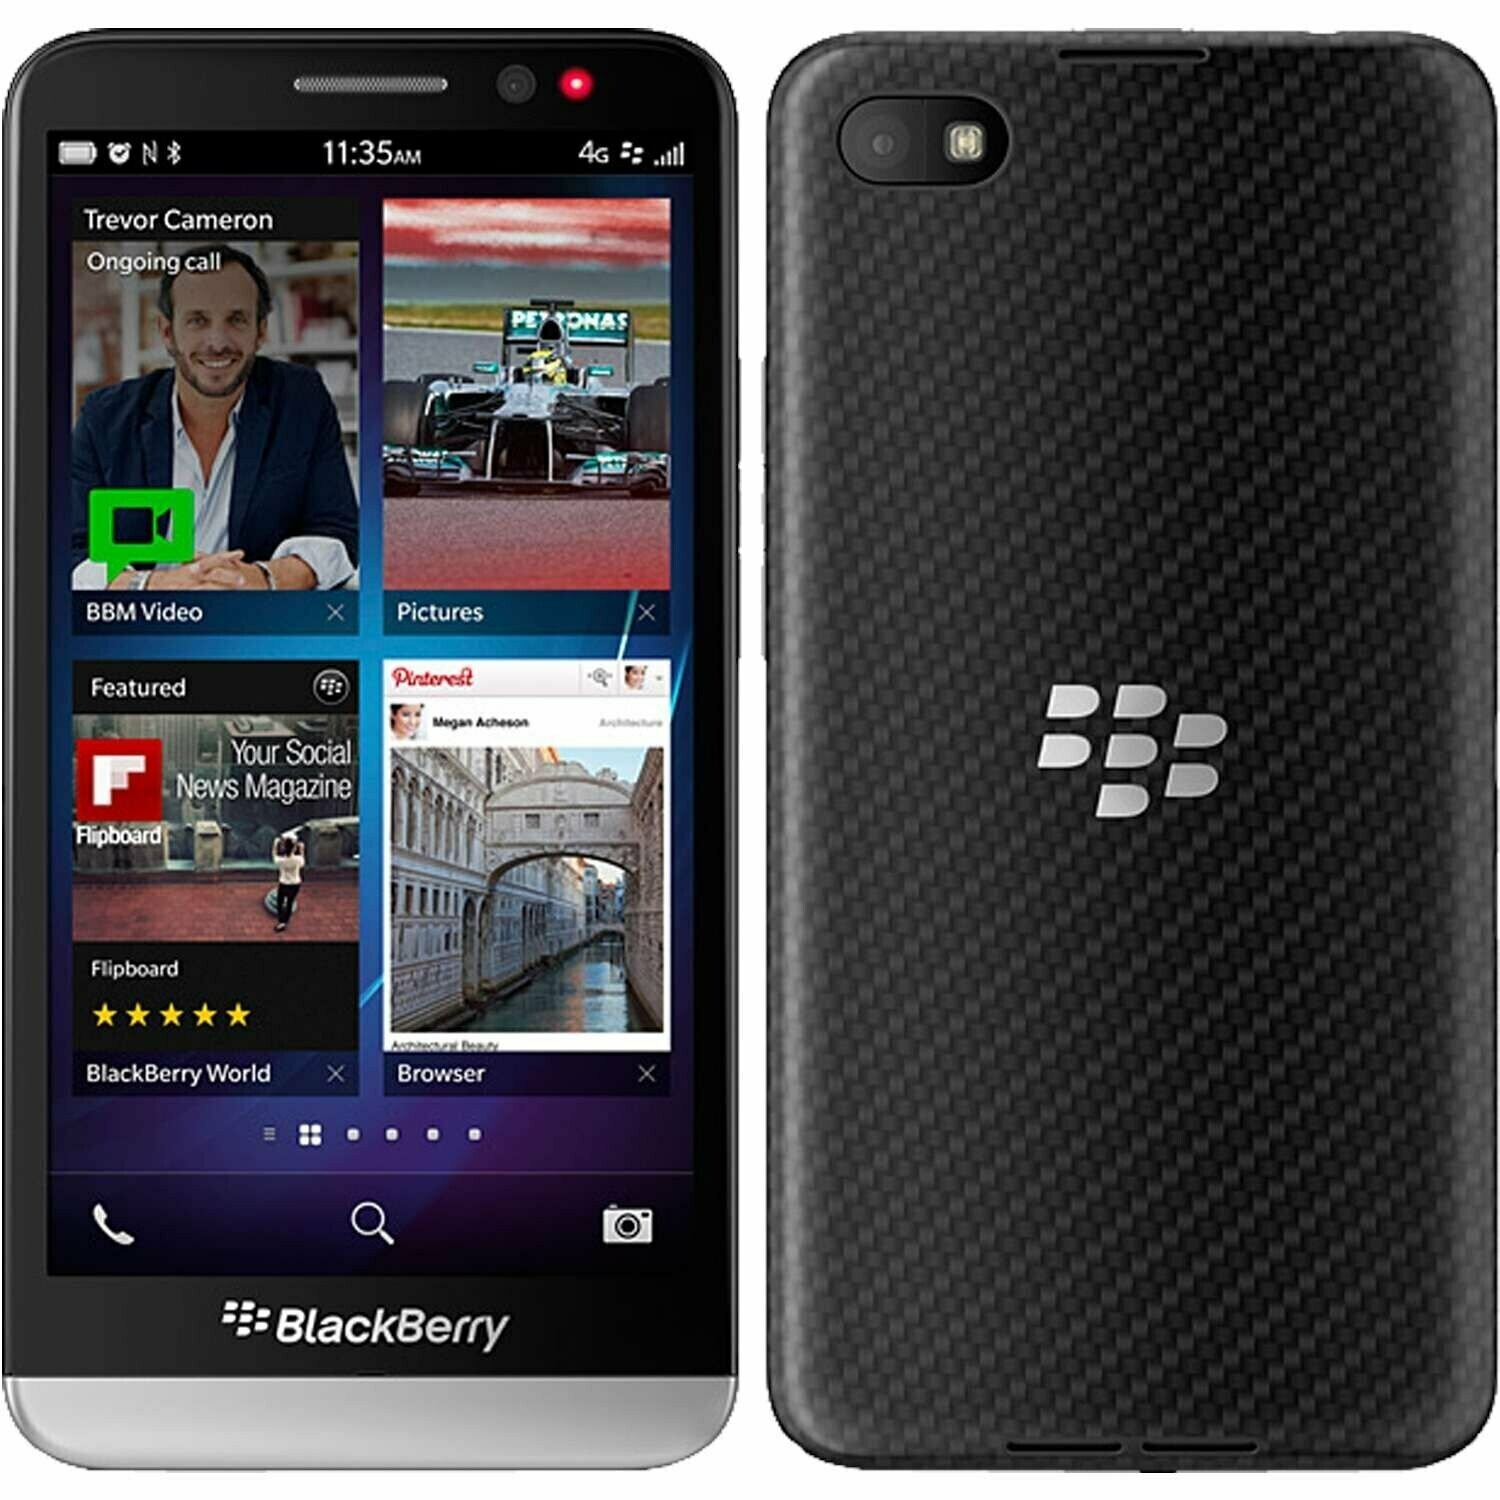 BOXED SEALED Blackberry Z30 16GB UNLOCKED